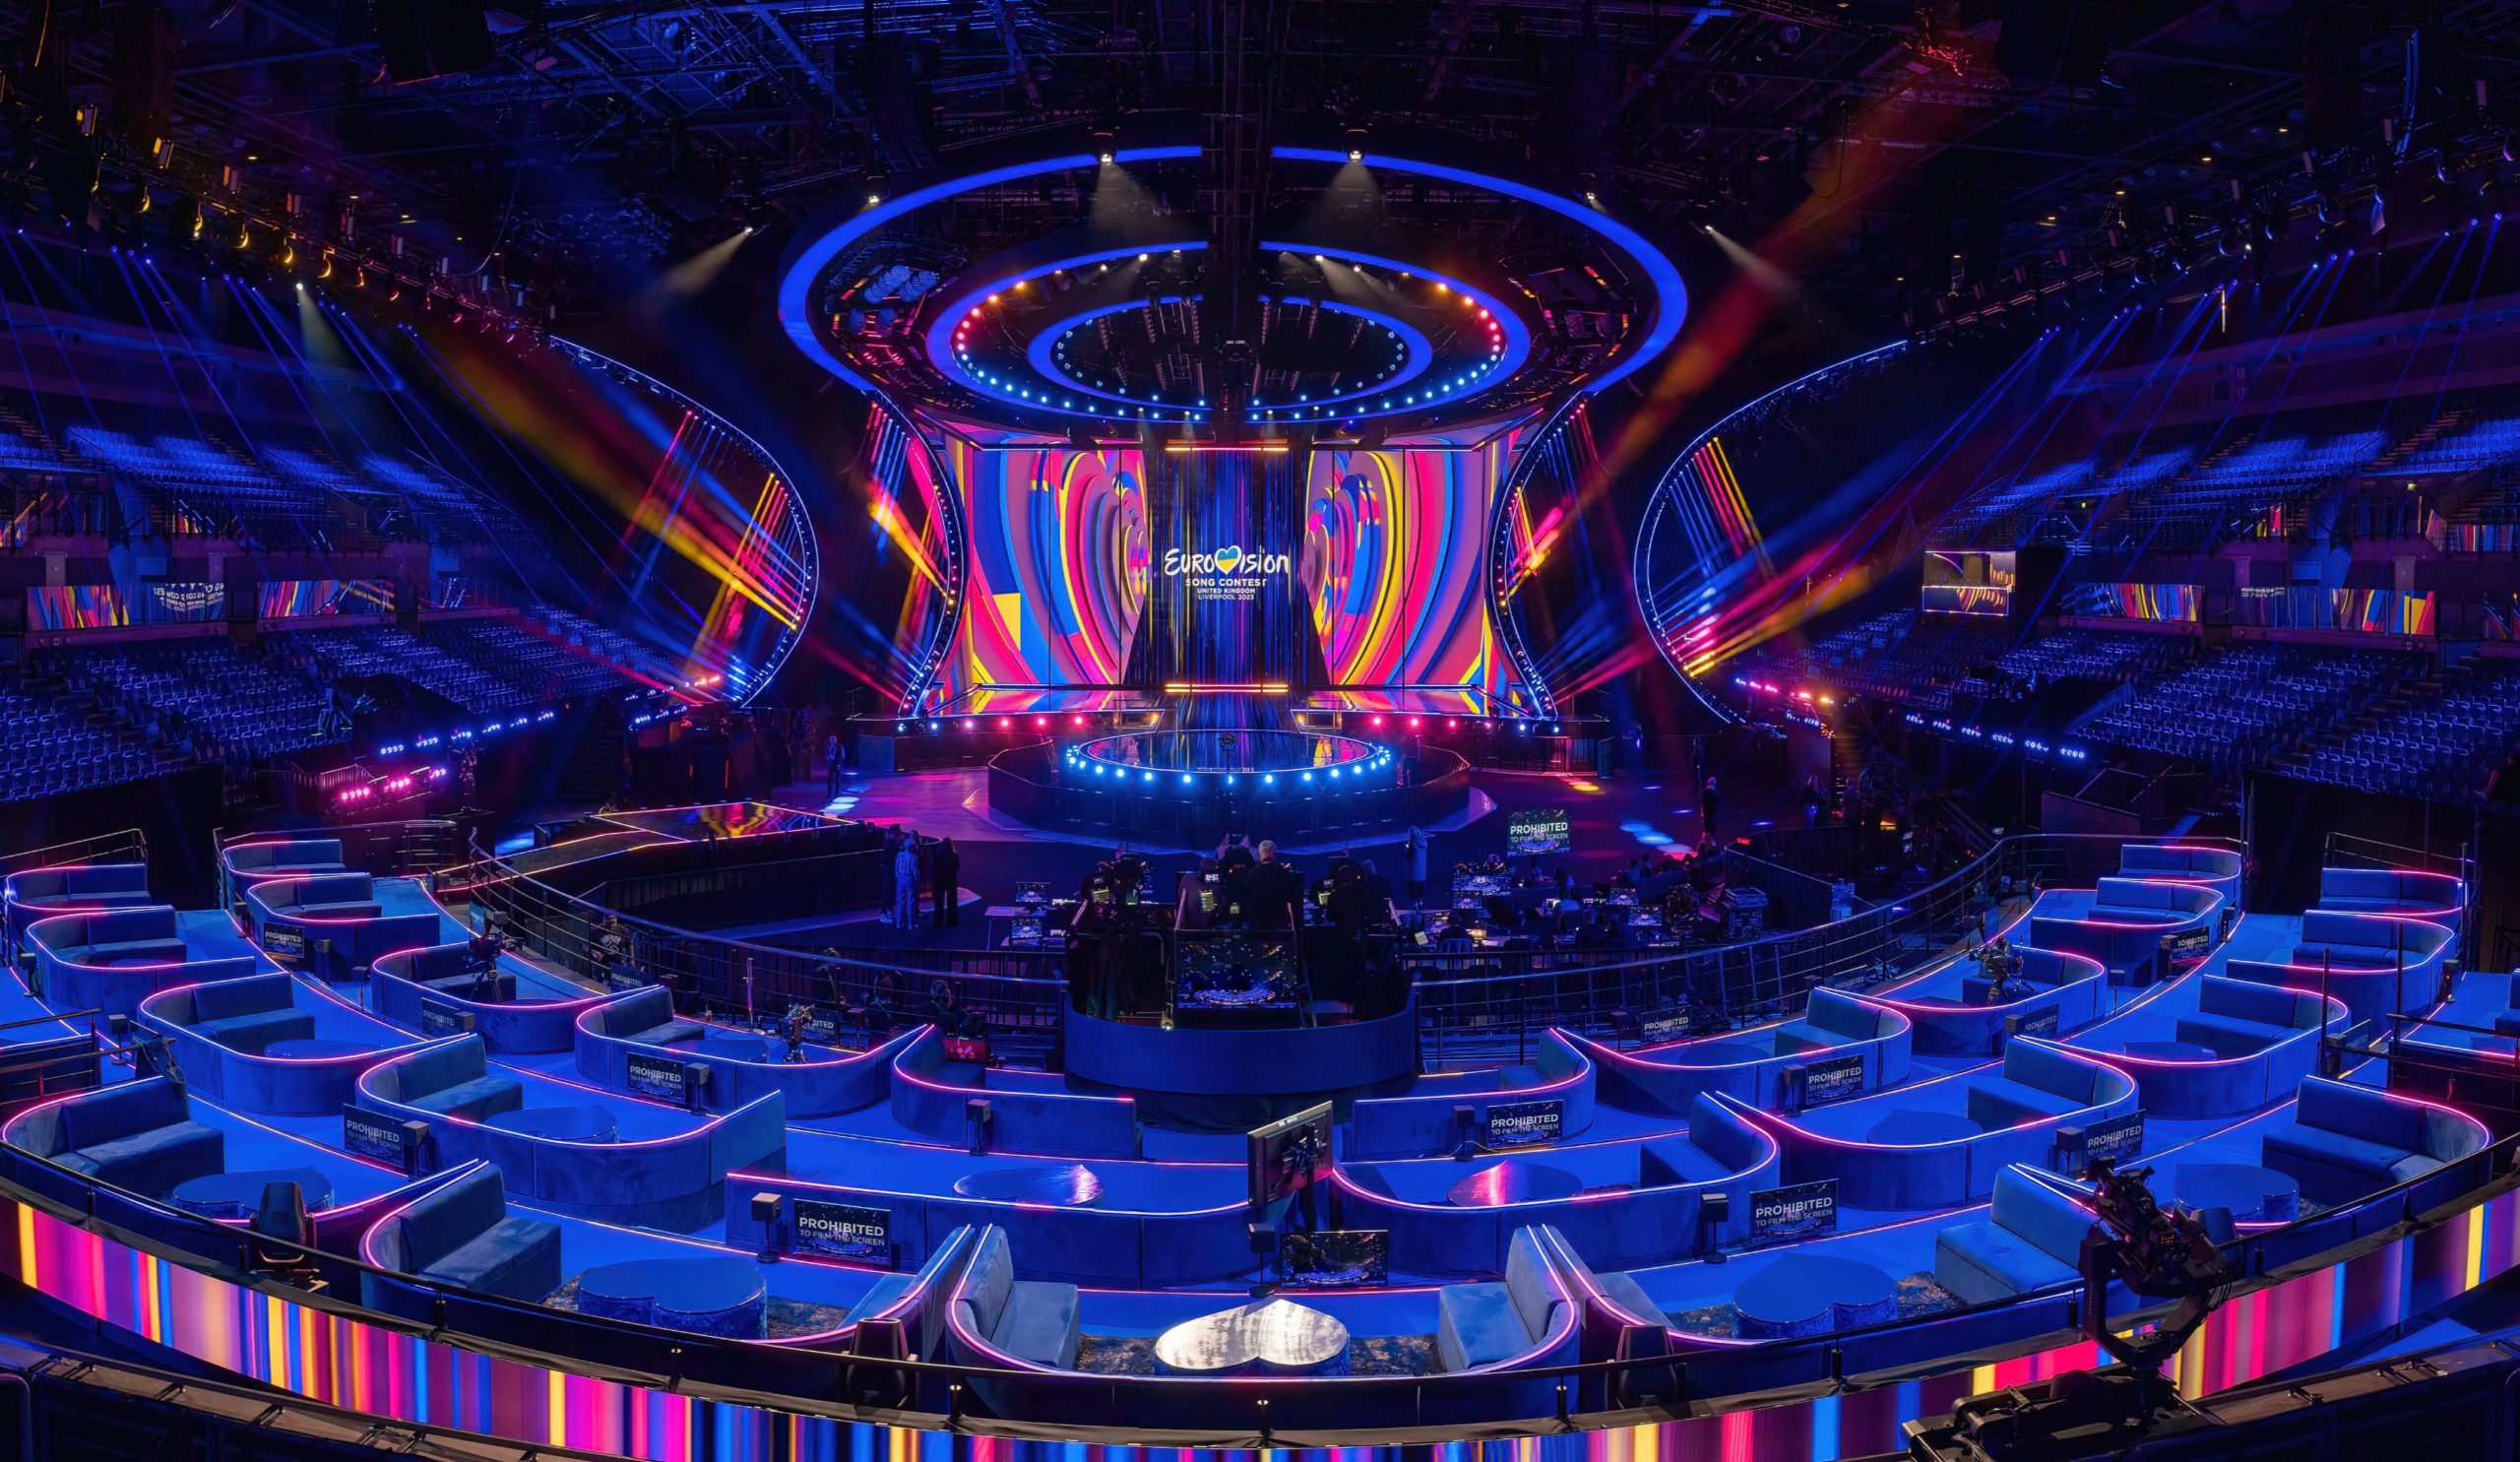 presentation eurovision 2023